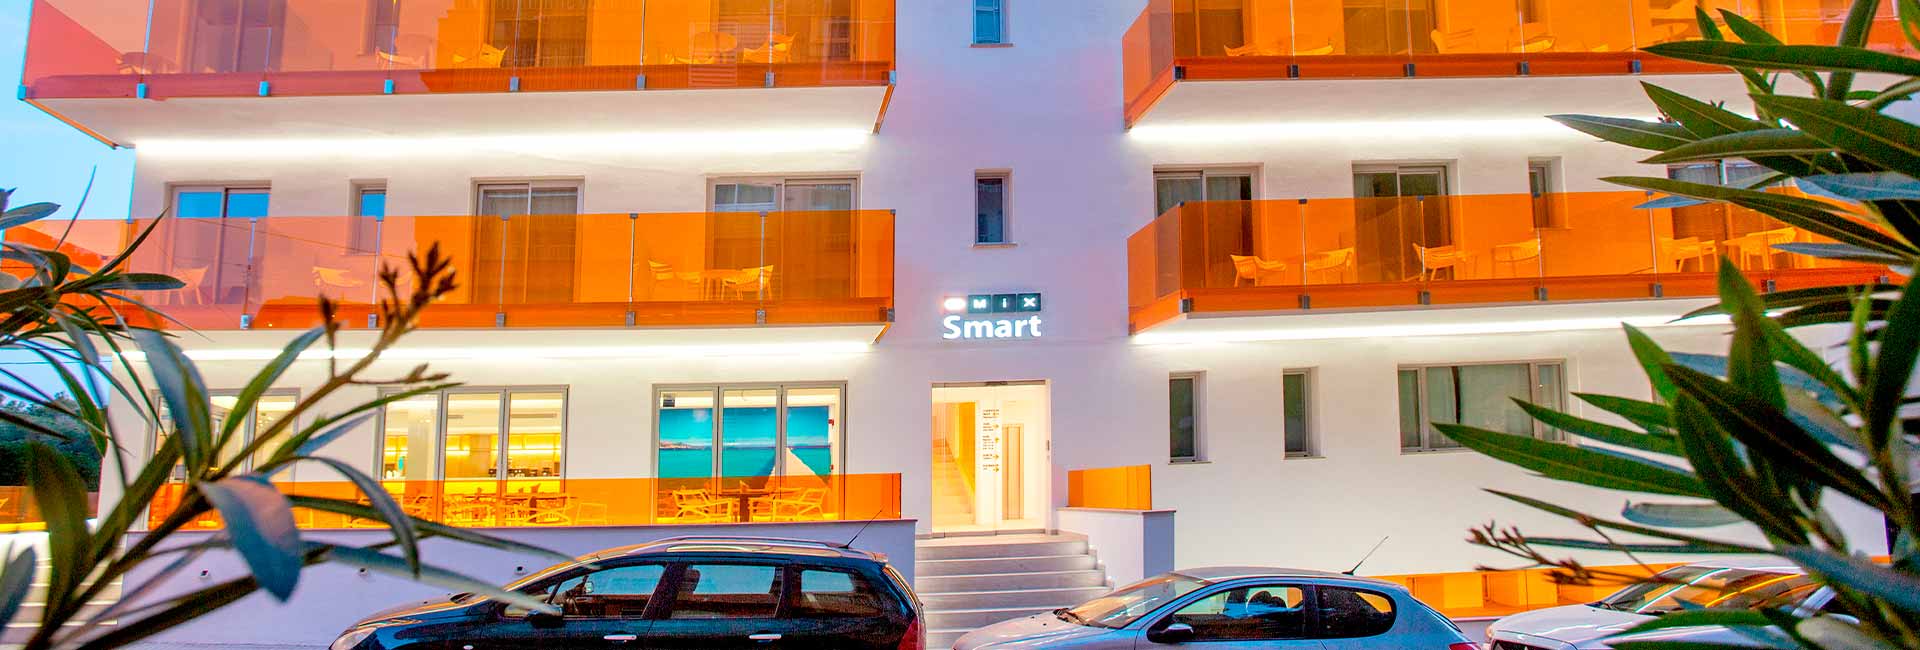 Conoce el Hotel Mix Smart en Mallorca